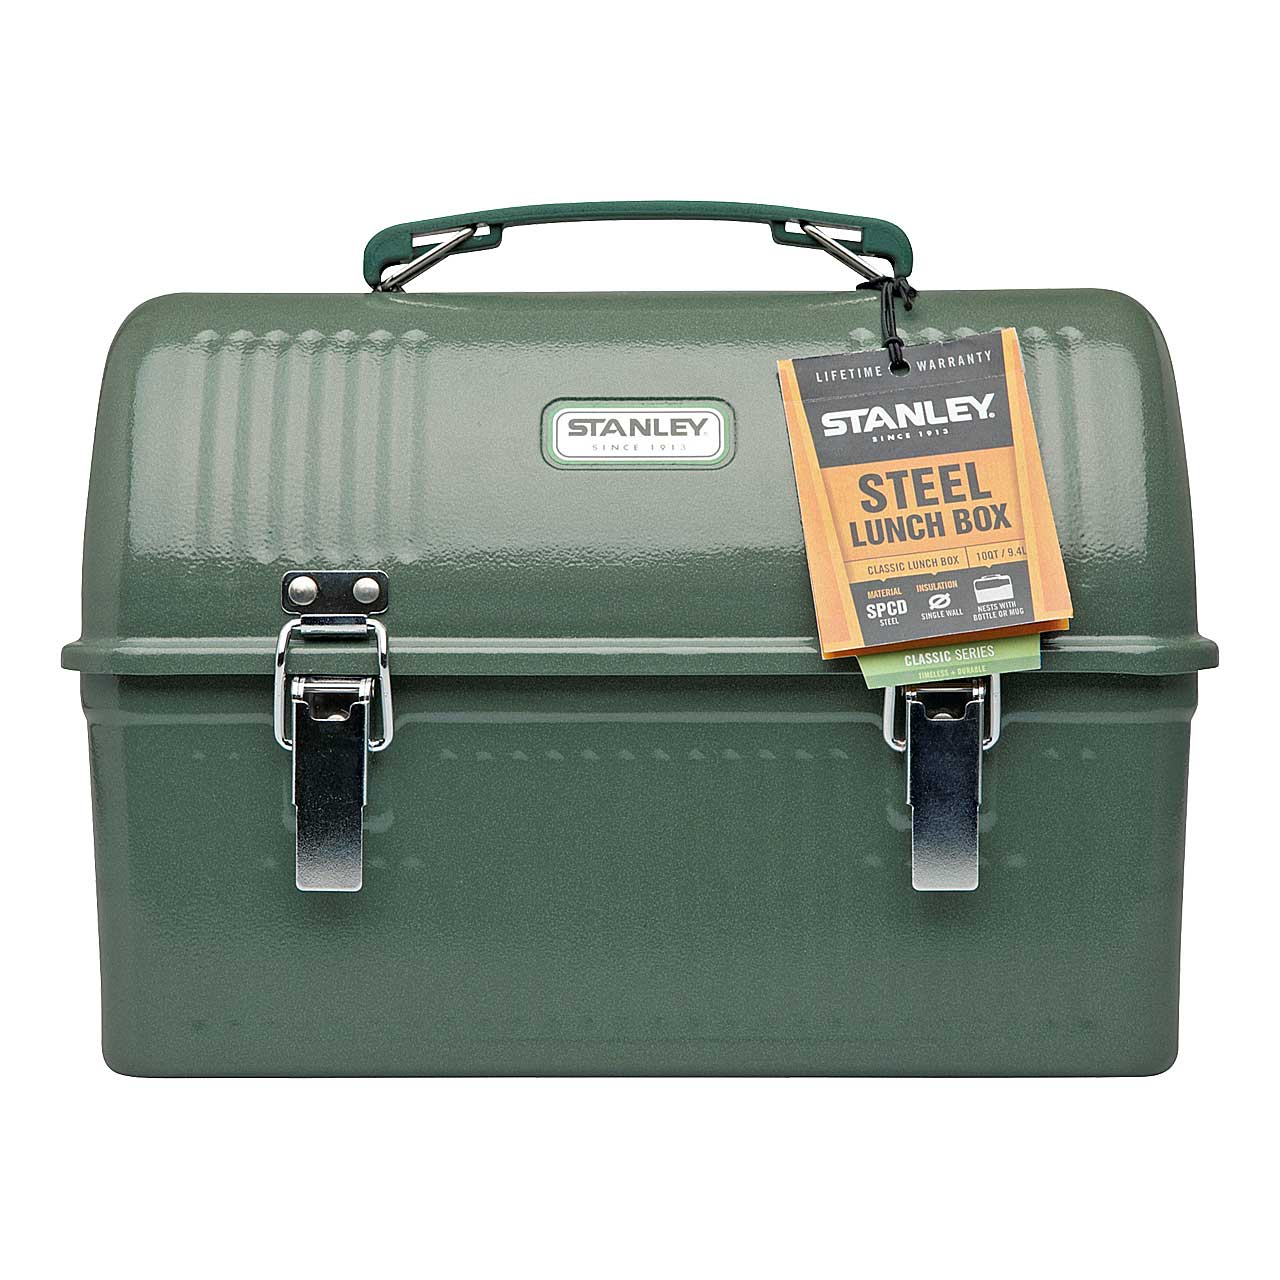 Stanley Classic Lunch Box, 9,4 Liter - Hammerton green